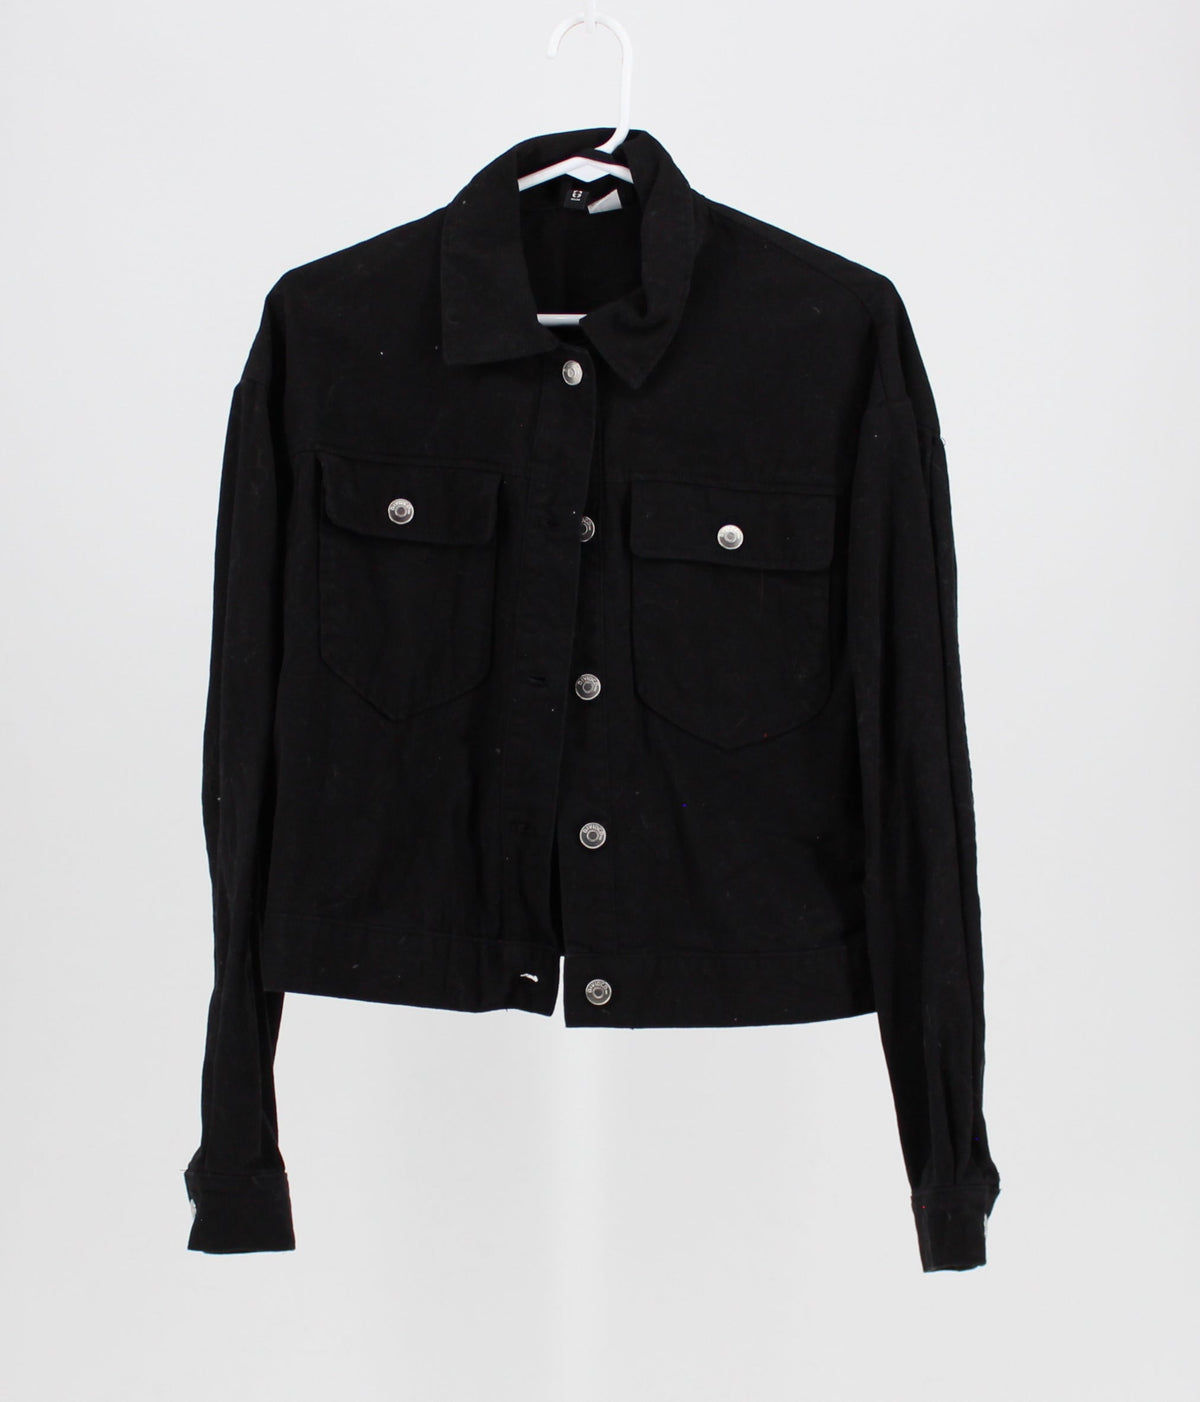 H&M Black Denim Jacket